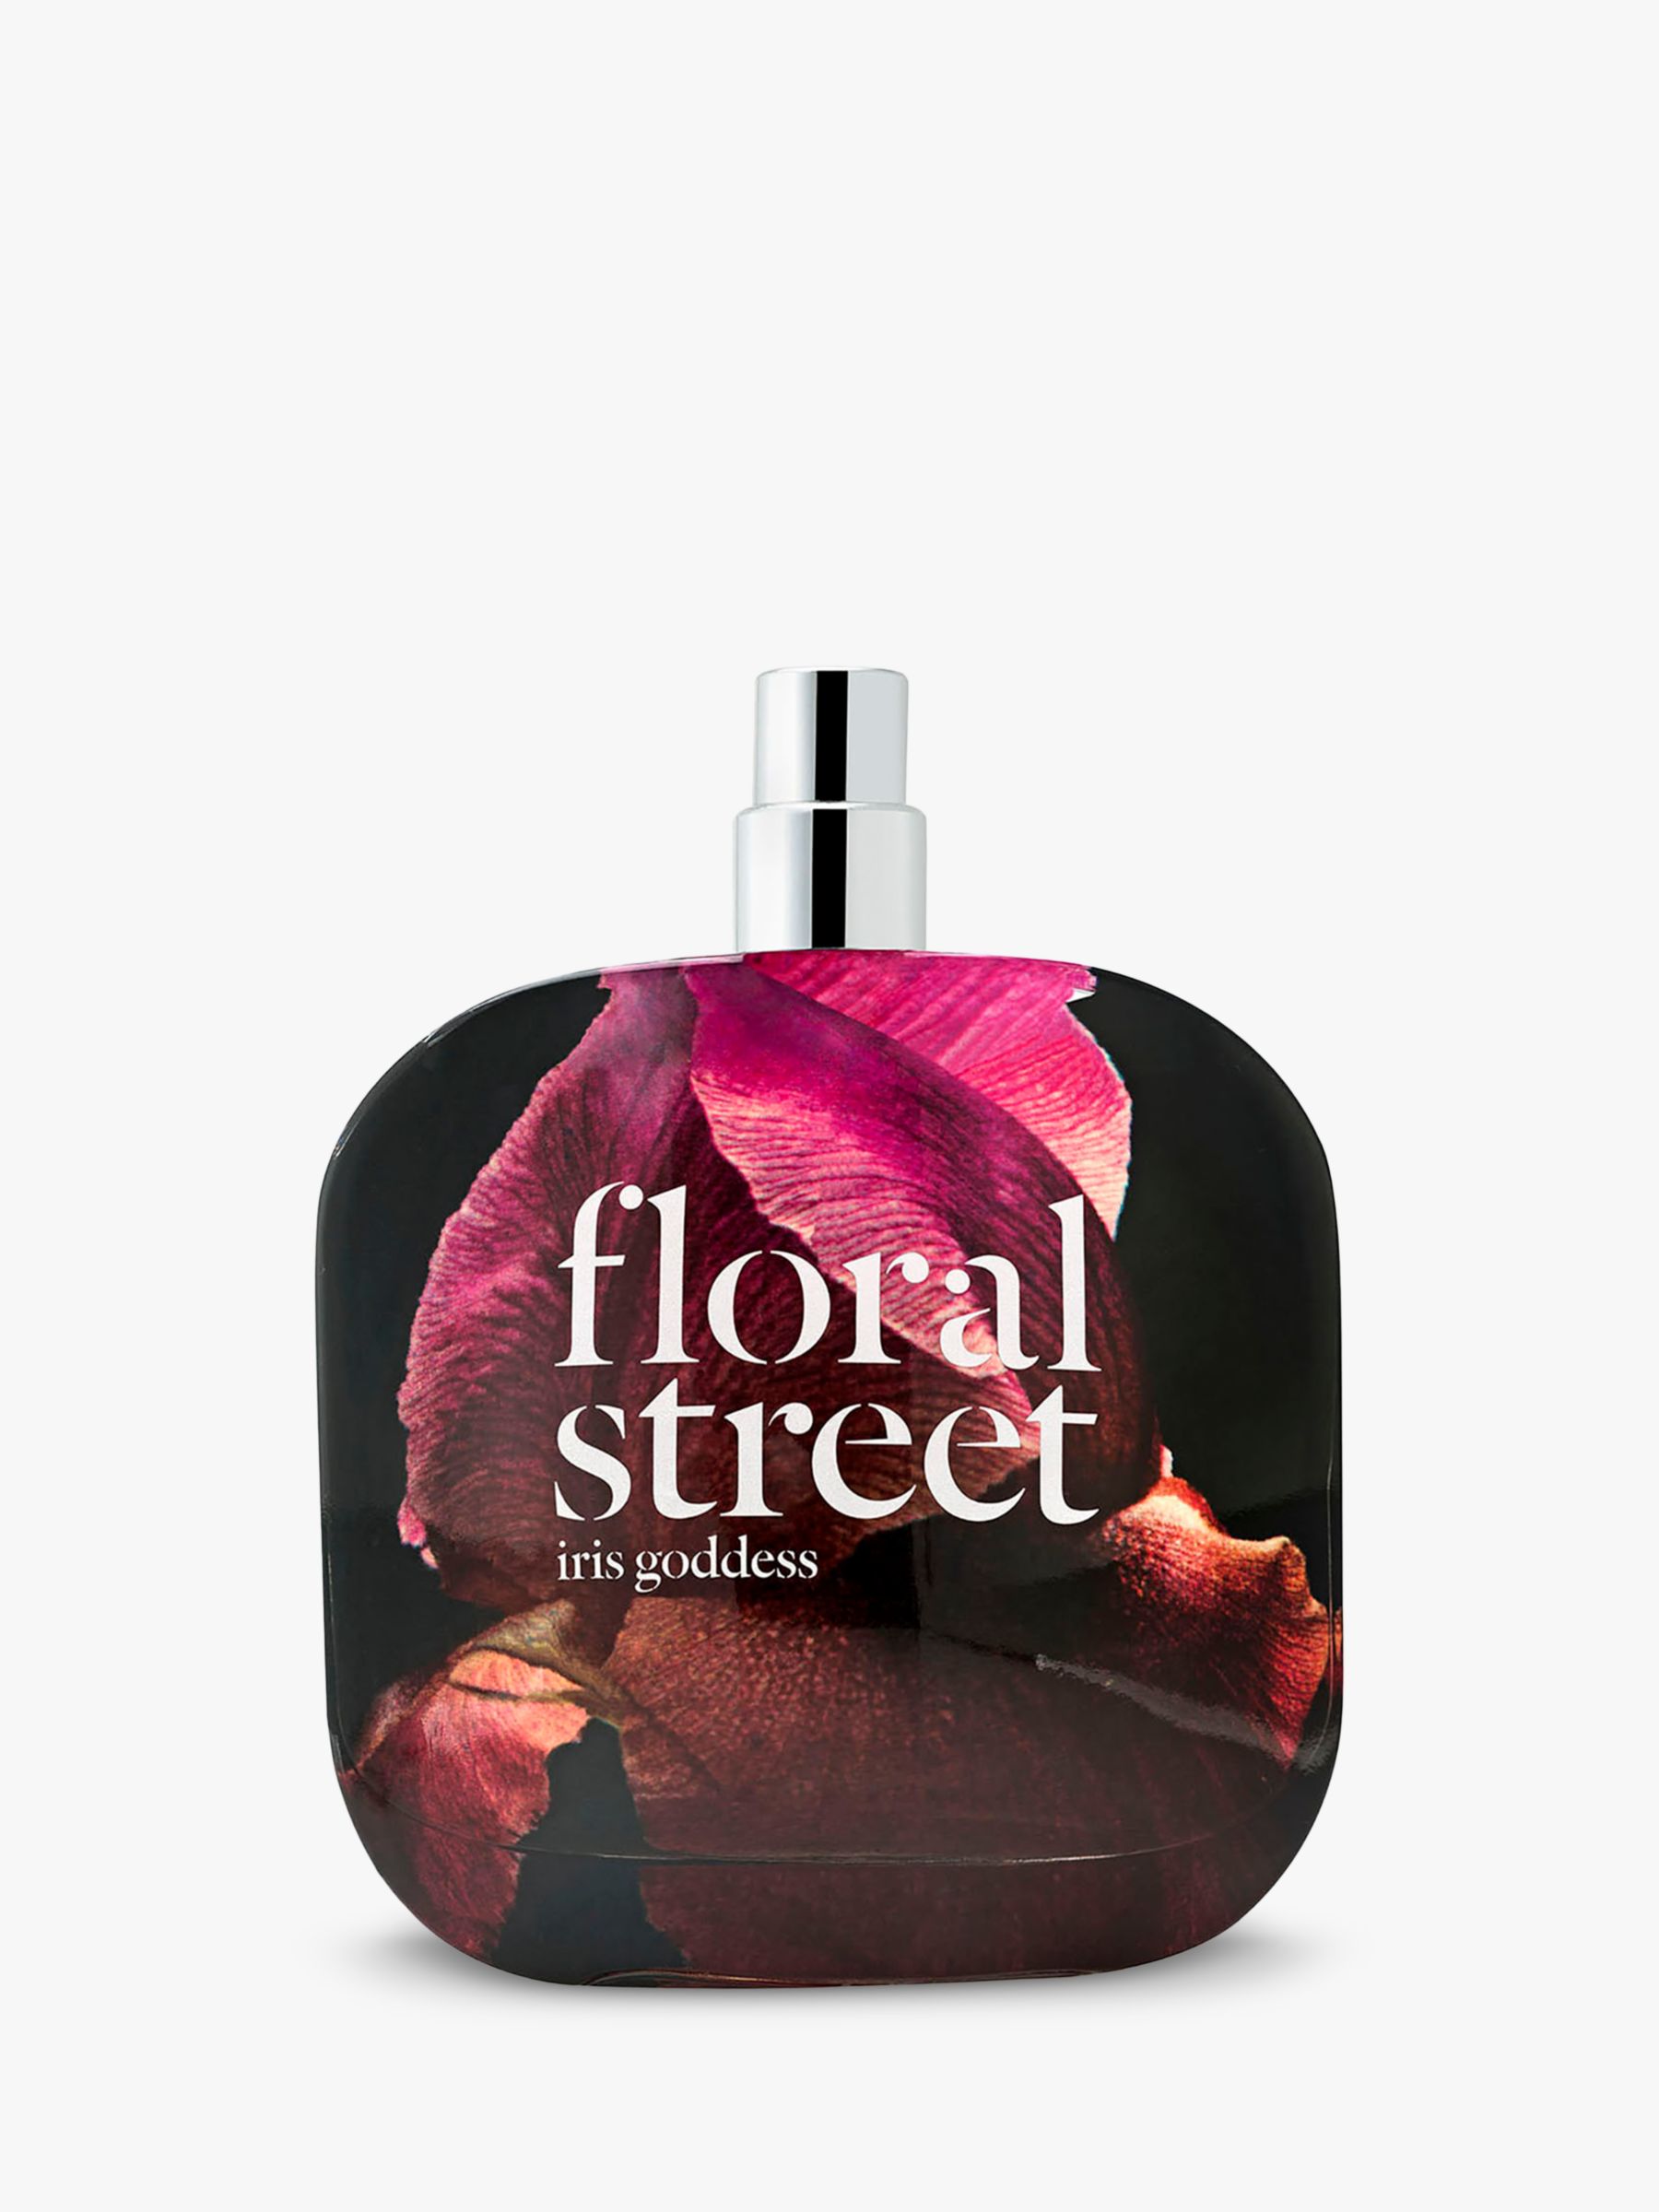 Floral Street Iris Goddess Eau de Parfum, 50ml at John Lewis & Partners